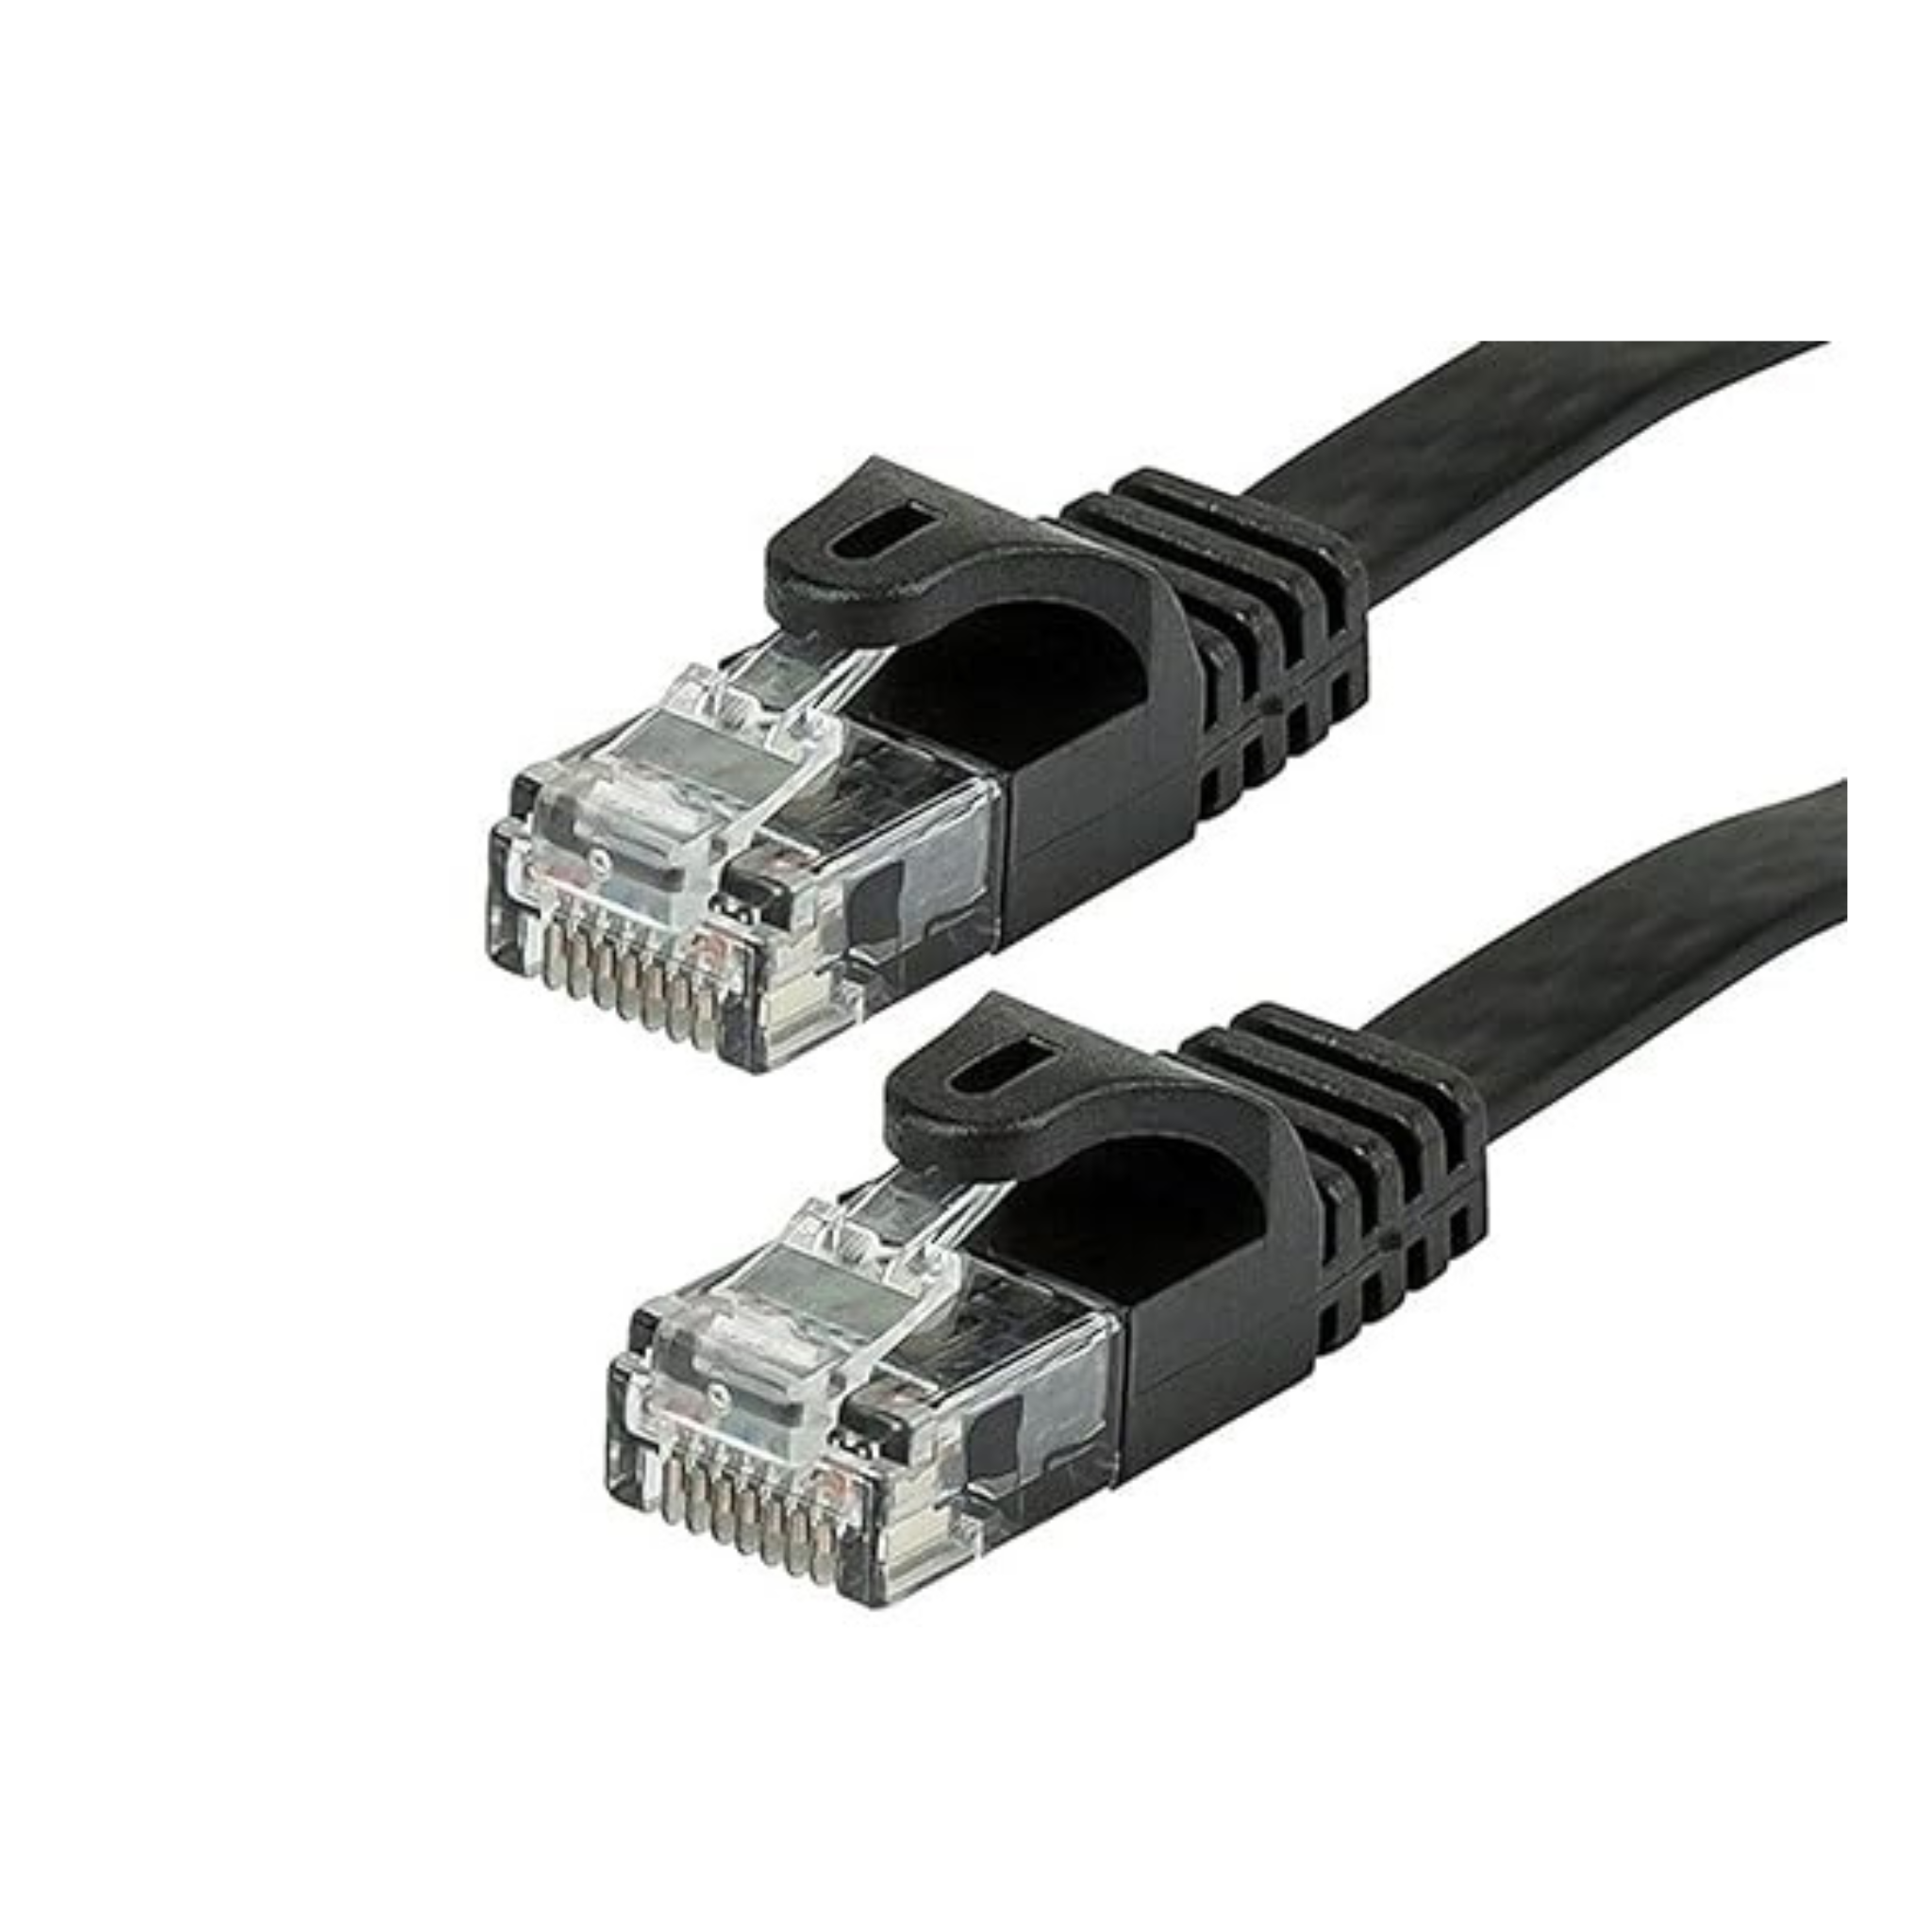 14-Ft Monoprice Flat Cat6 Ethernet Patch Cable (Black)